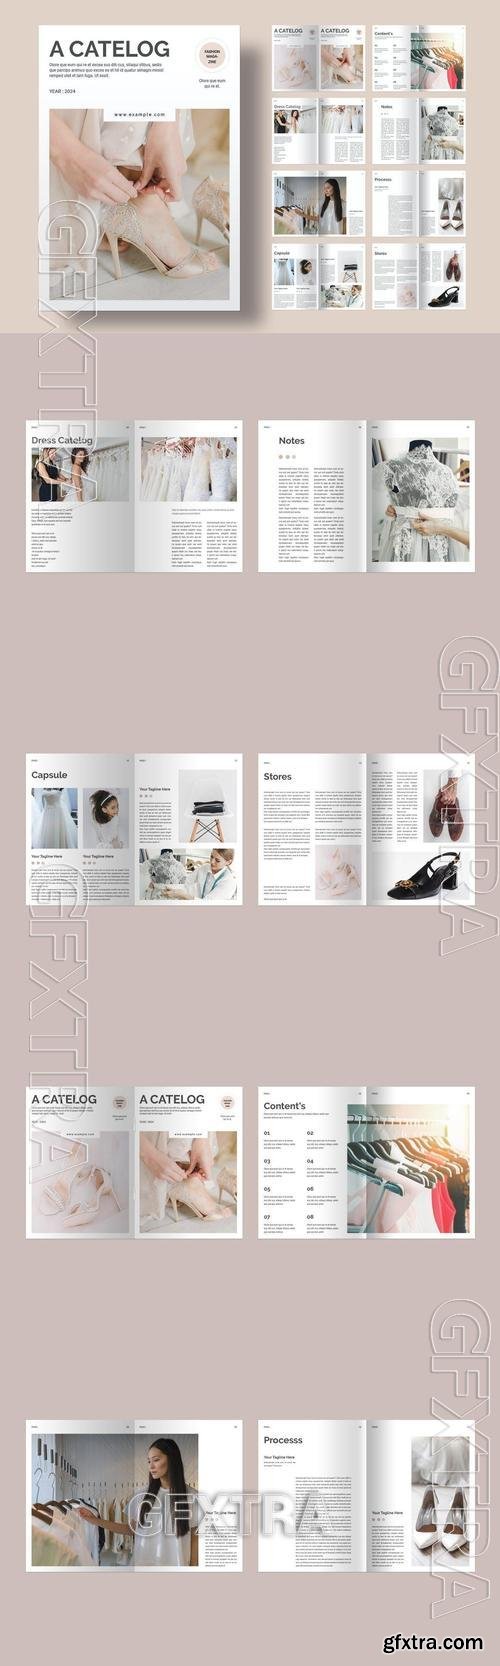 A Catalog Magazine BK4LCFJ